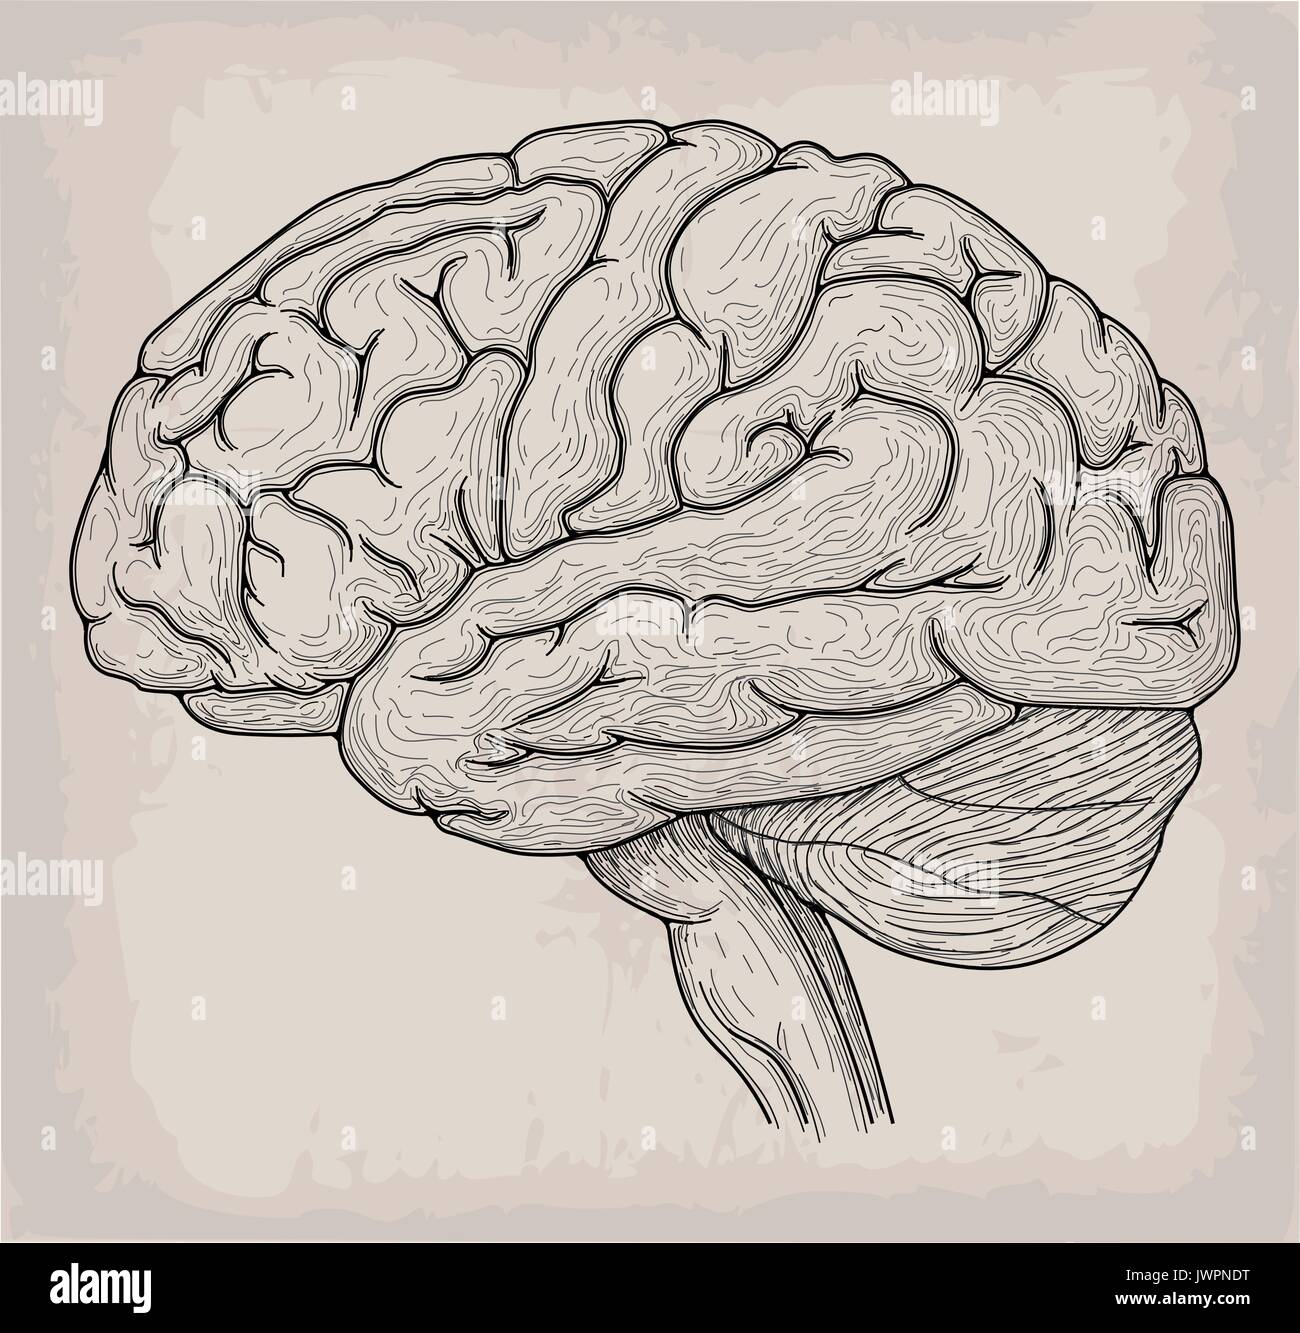 anatomical brain heart hand drawn organ sketch medicine vector illustration JWPNDT